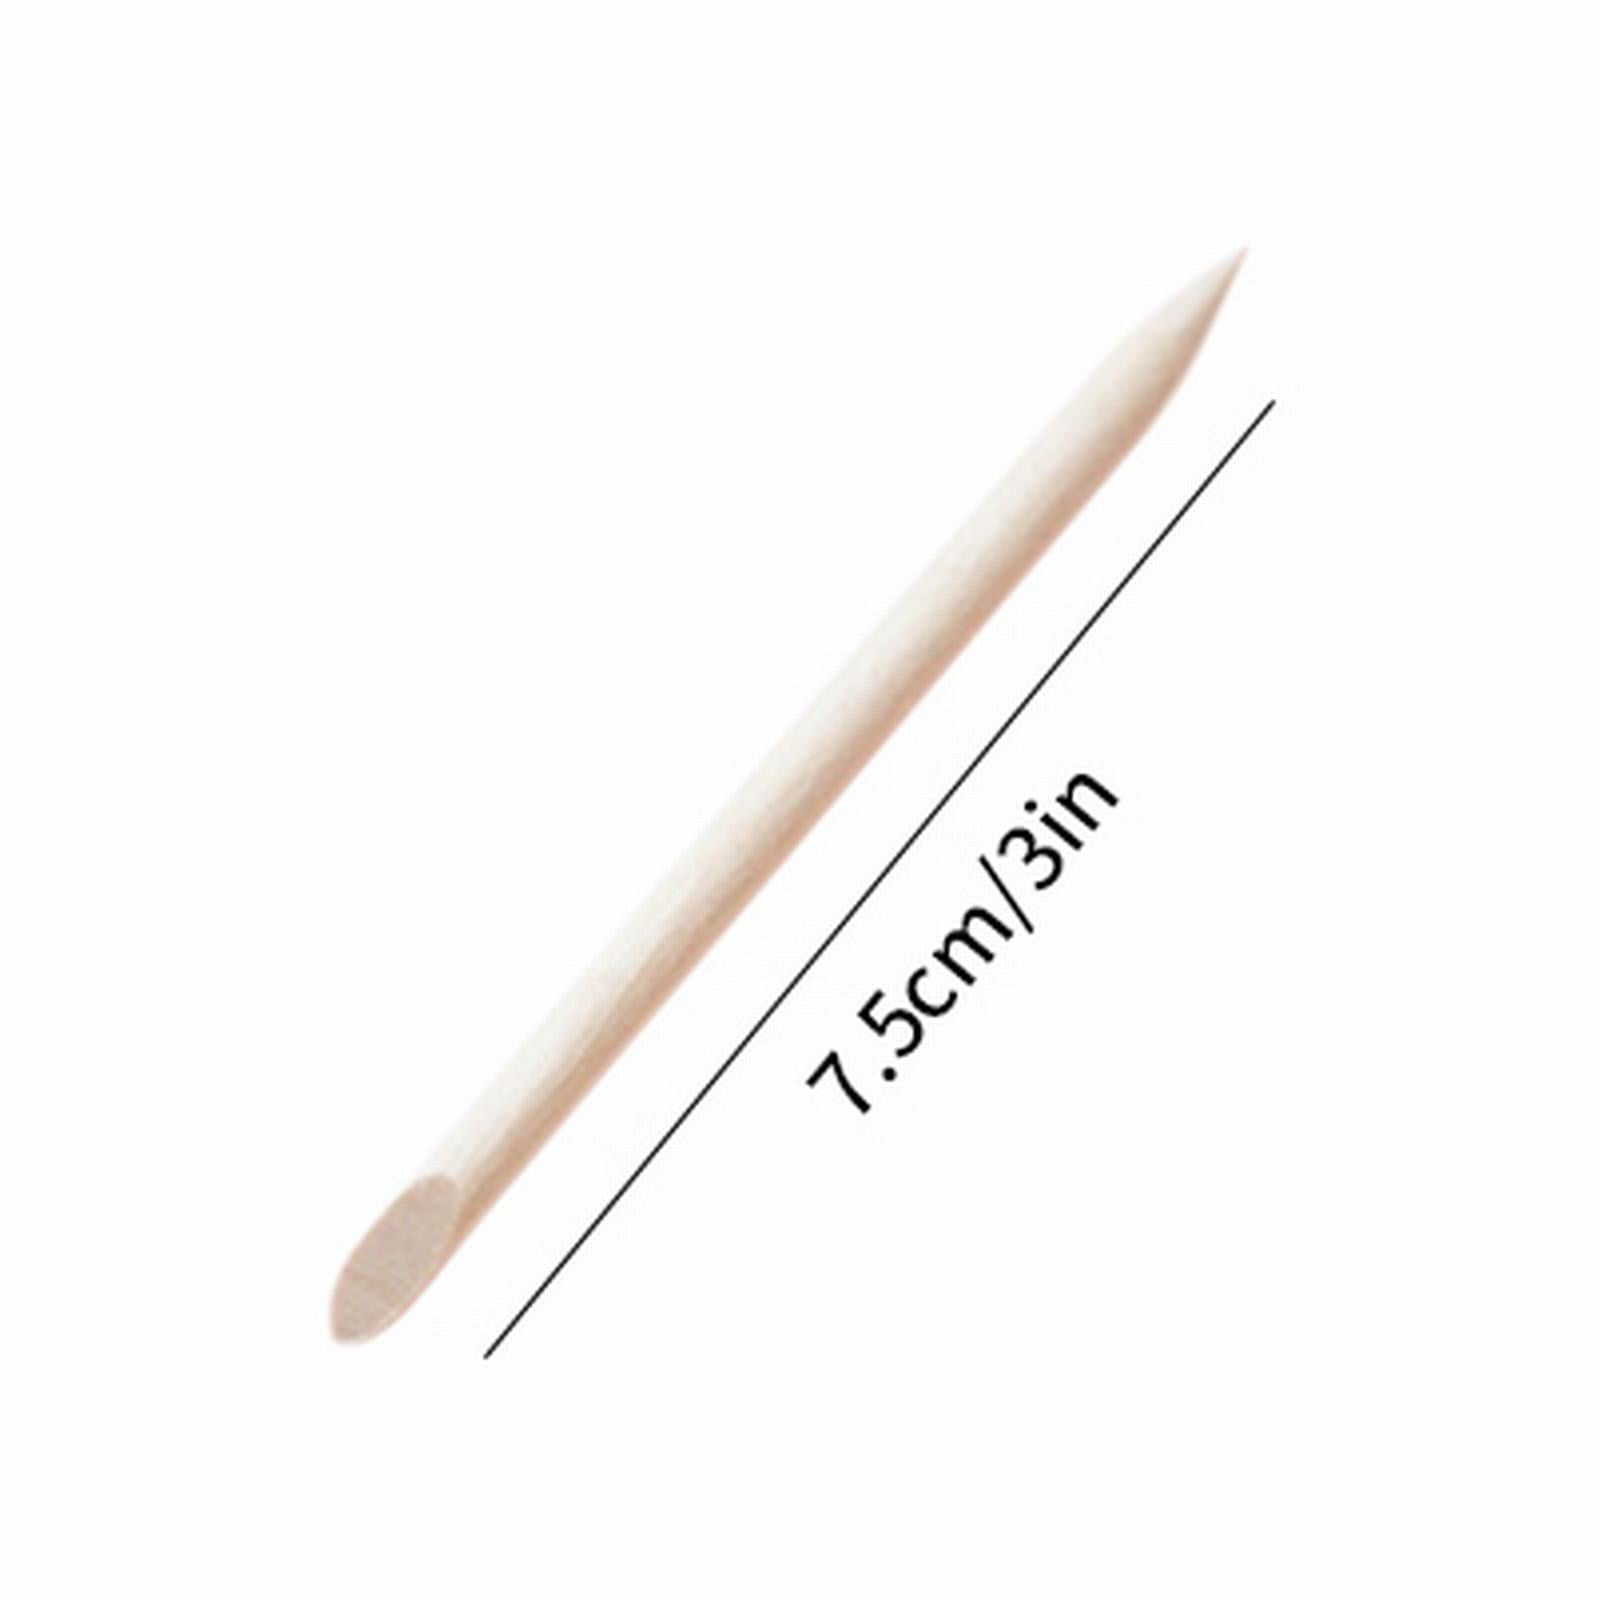 7 Long Orange Wood Cuticle Pusher or Wax Applicator Sticks – The